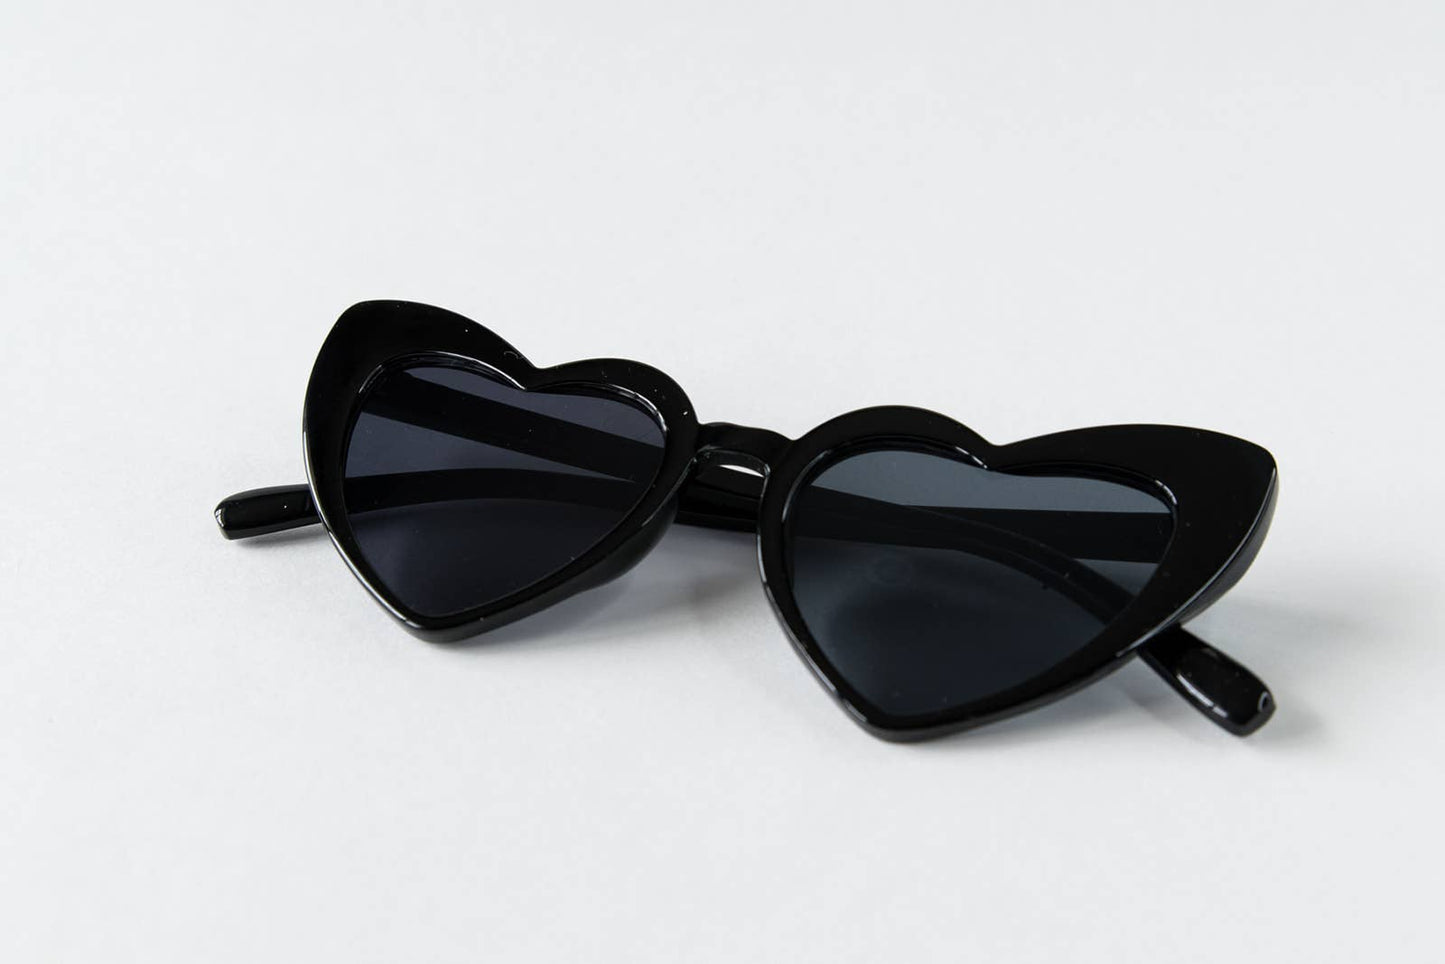 Toddler & Kid Valentines Day Heart Sunglasses - Black